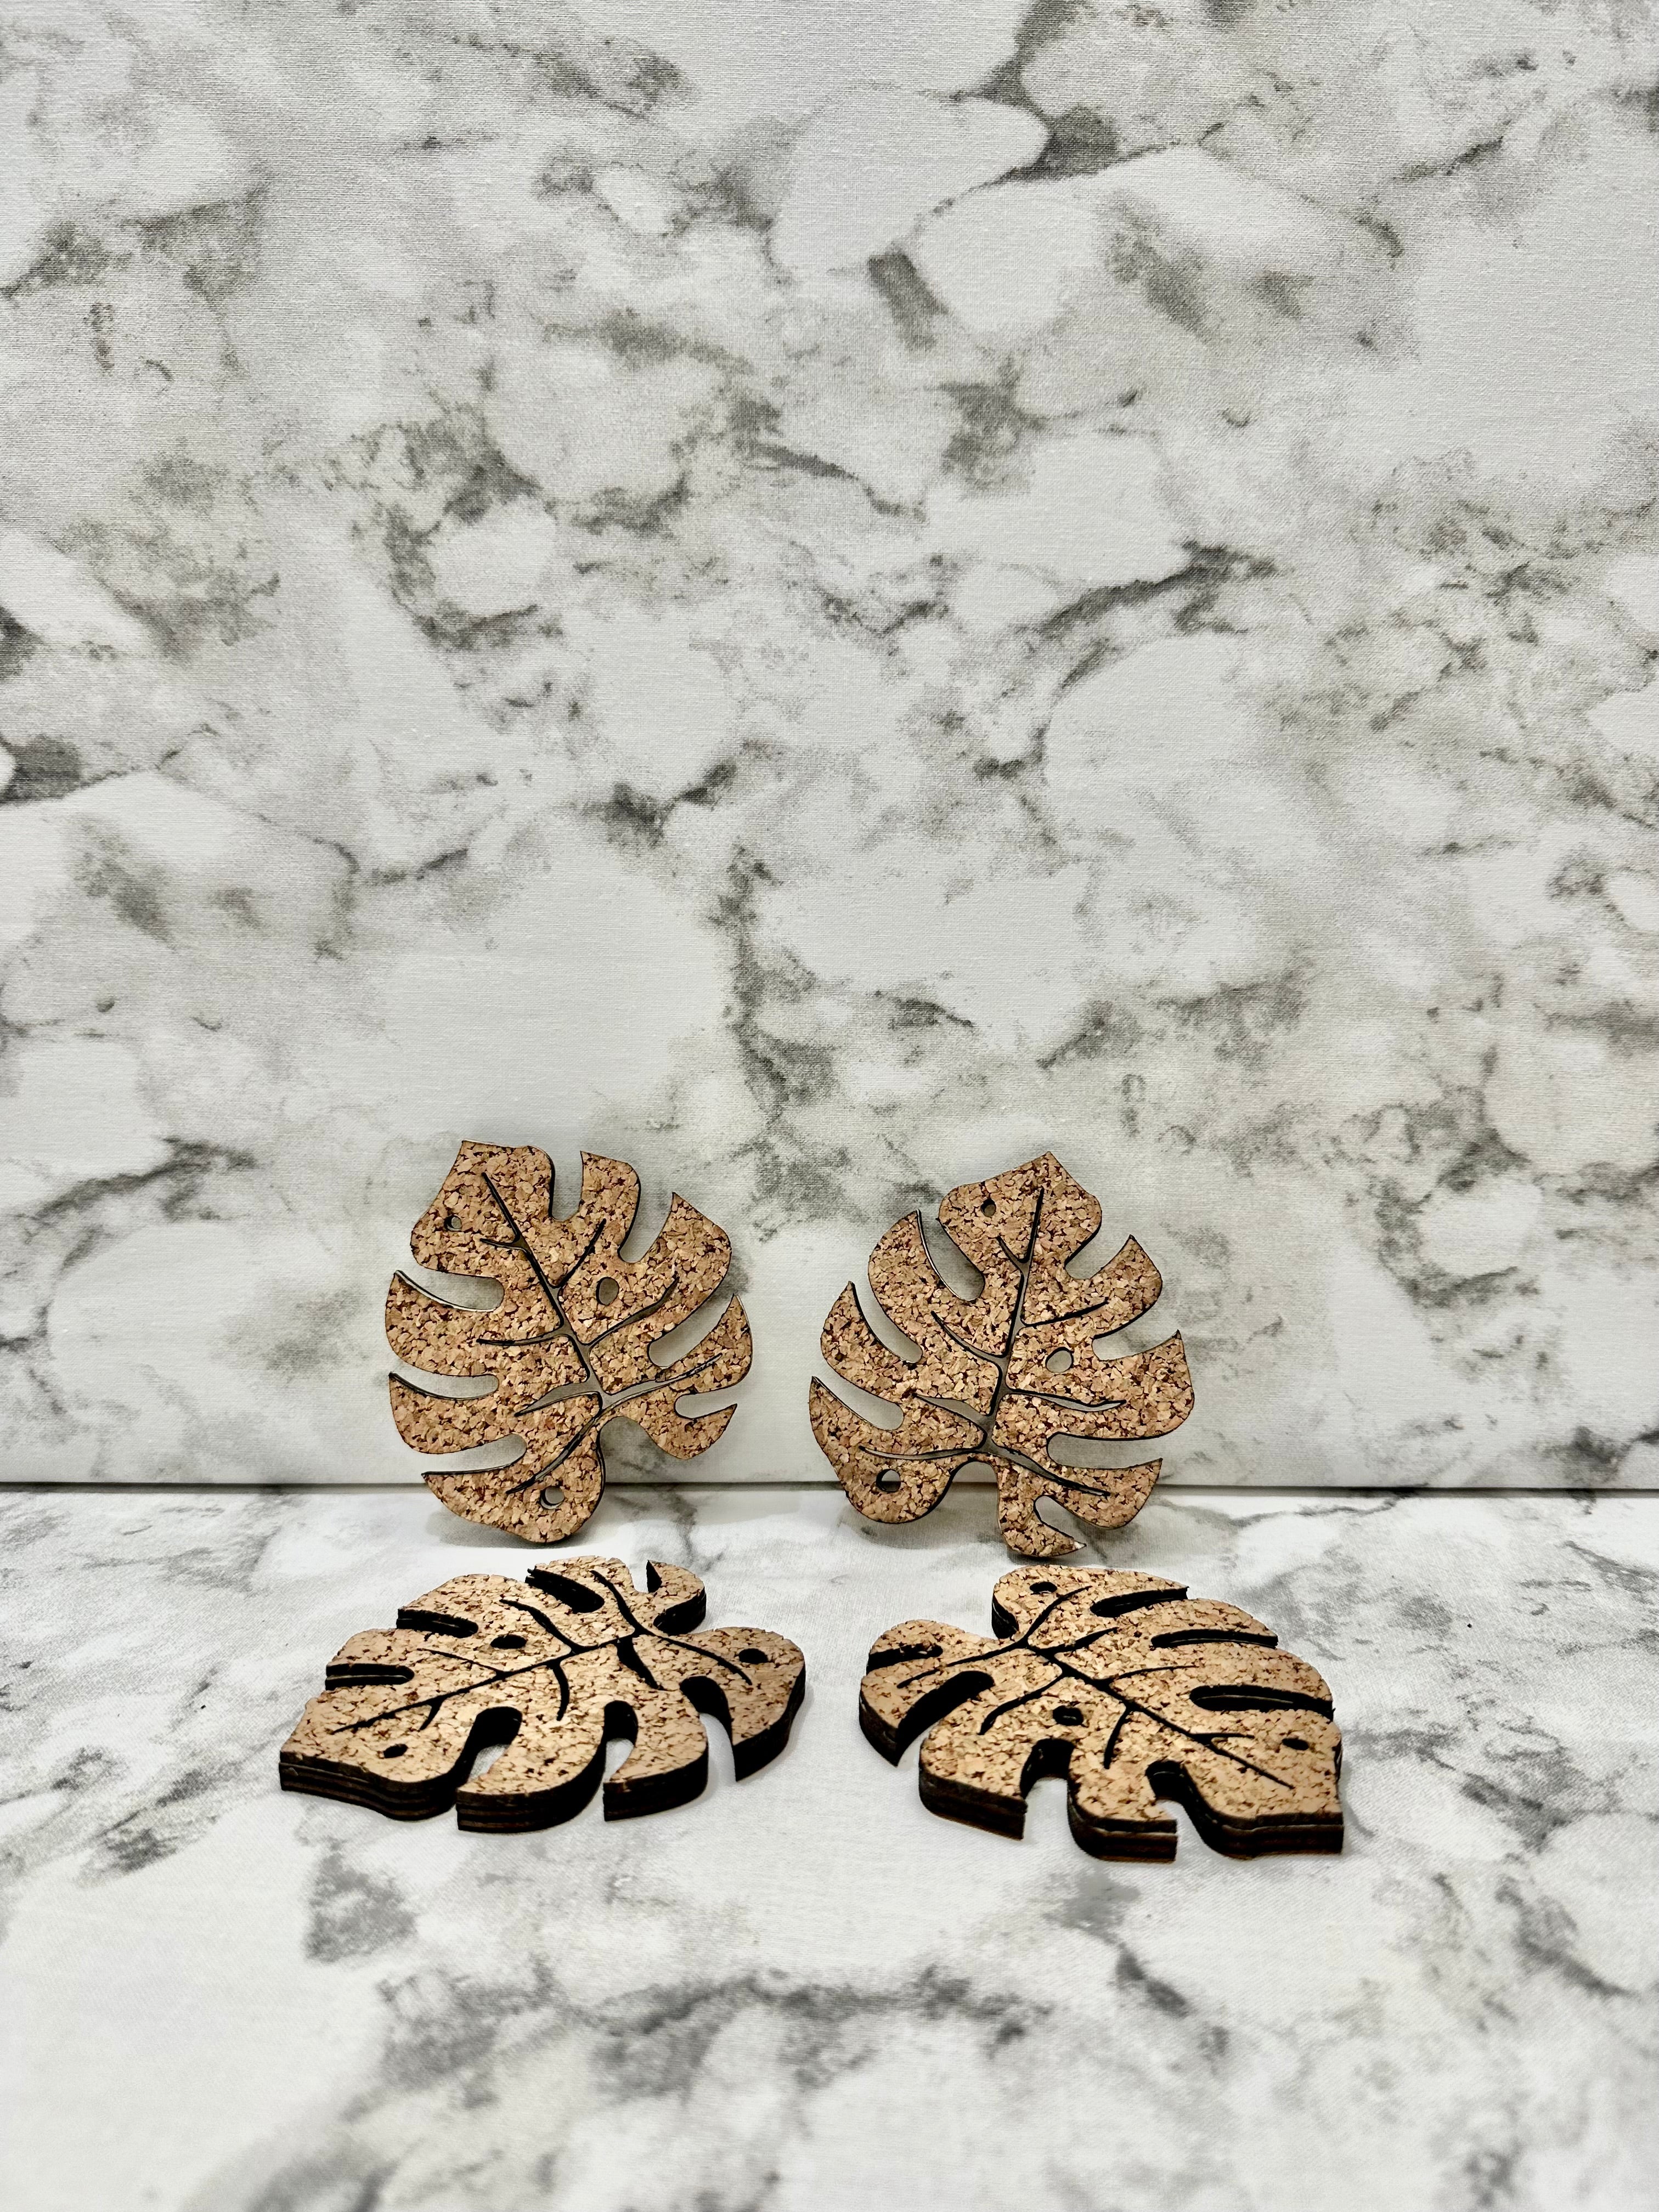 Monstera leaf cork coasters, set of 4.